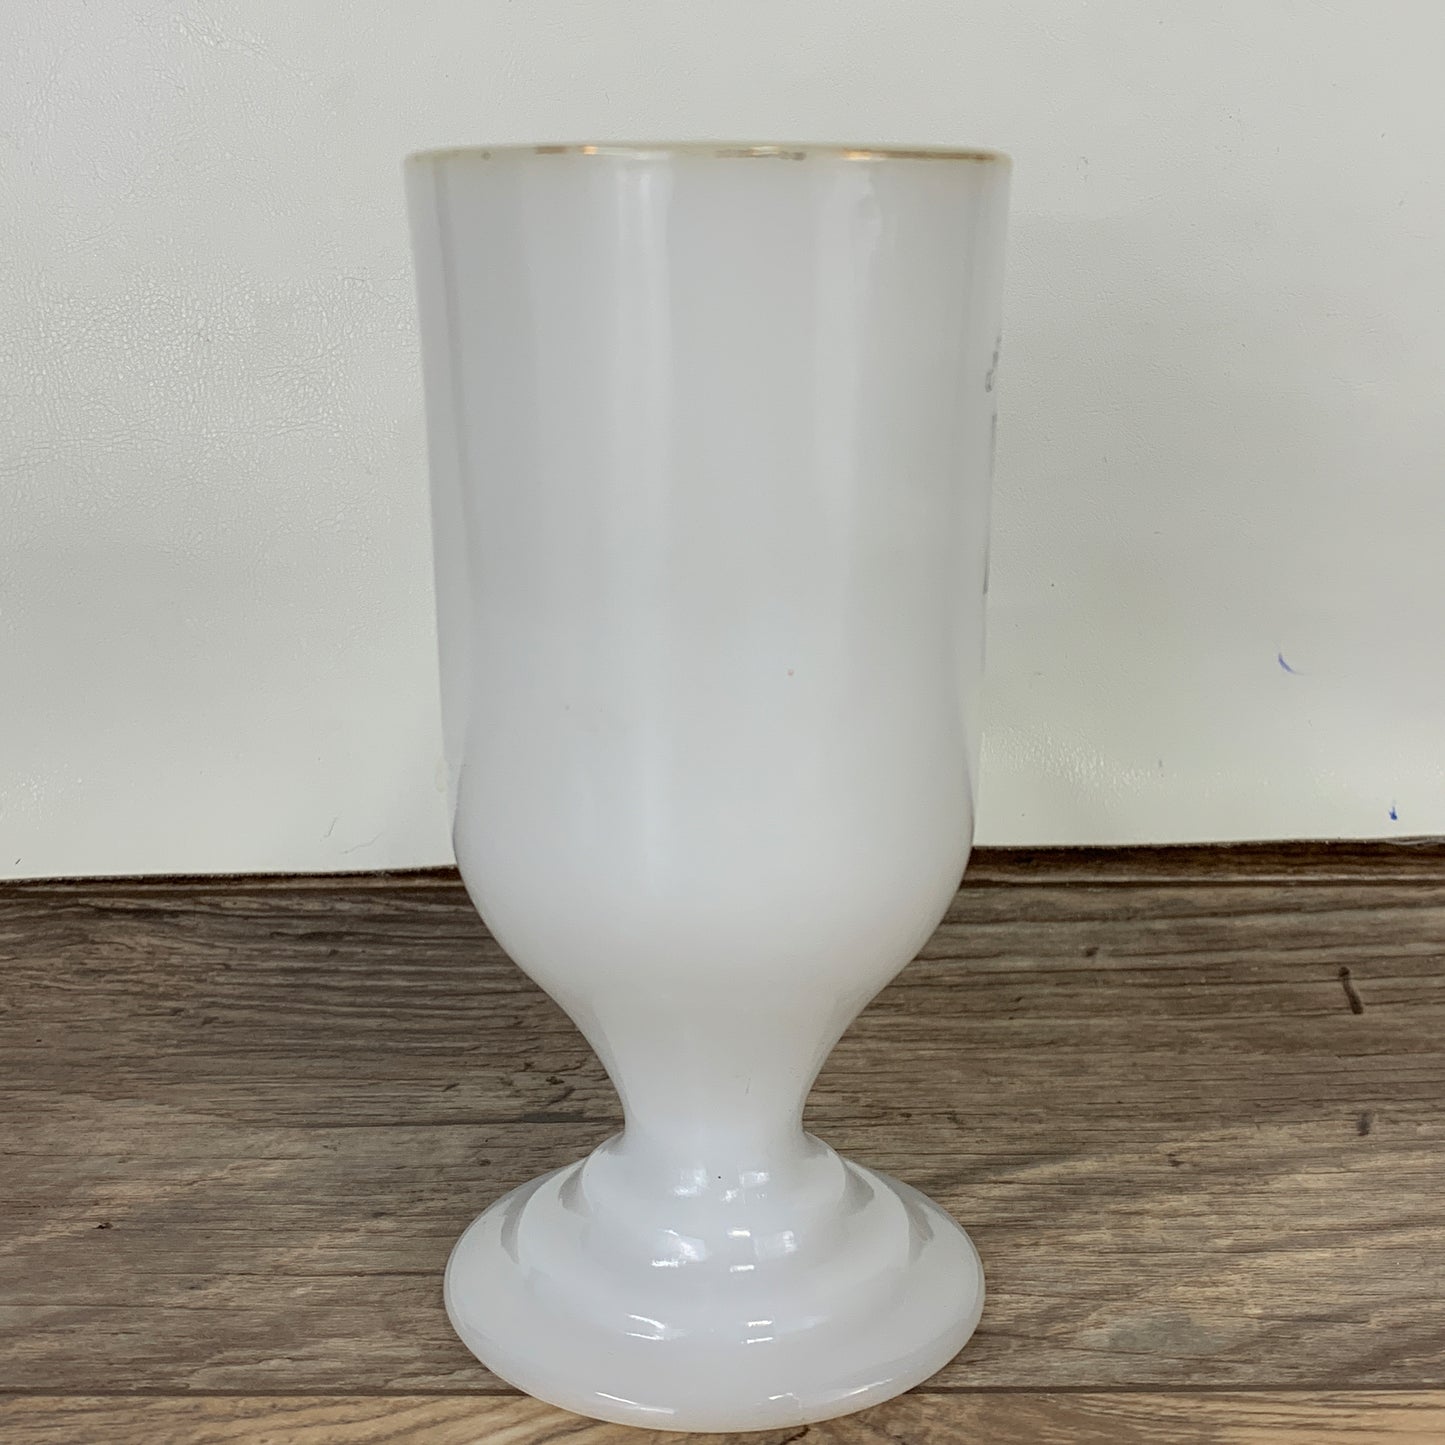 Canada Centennial Milk Glass Collectible Specialty Coffee Mugs 1867 - 1967 Set of 2